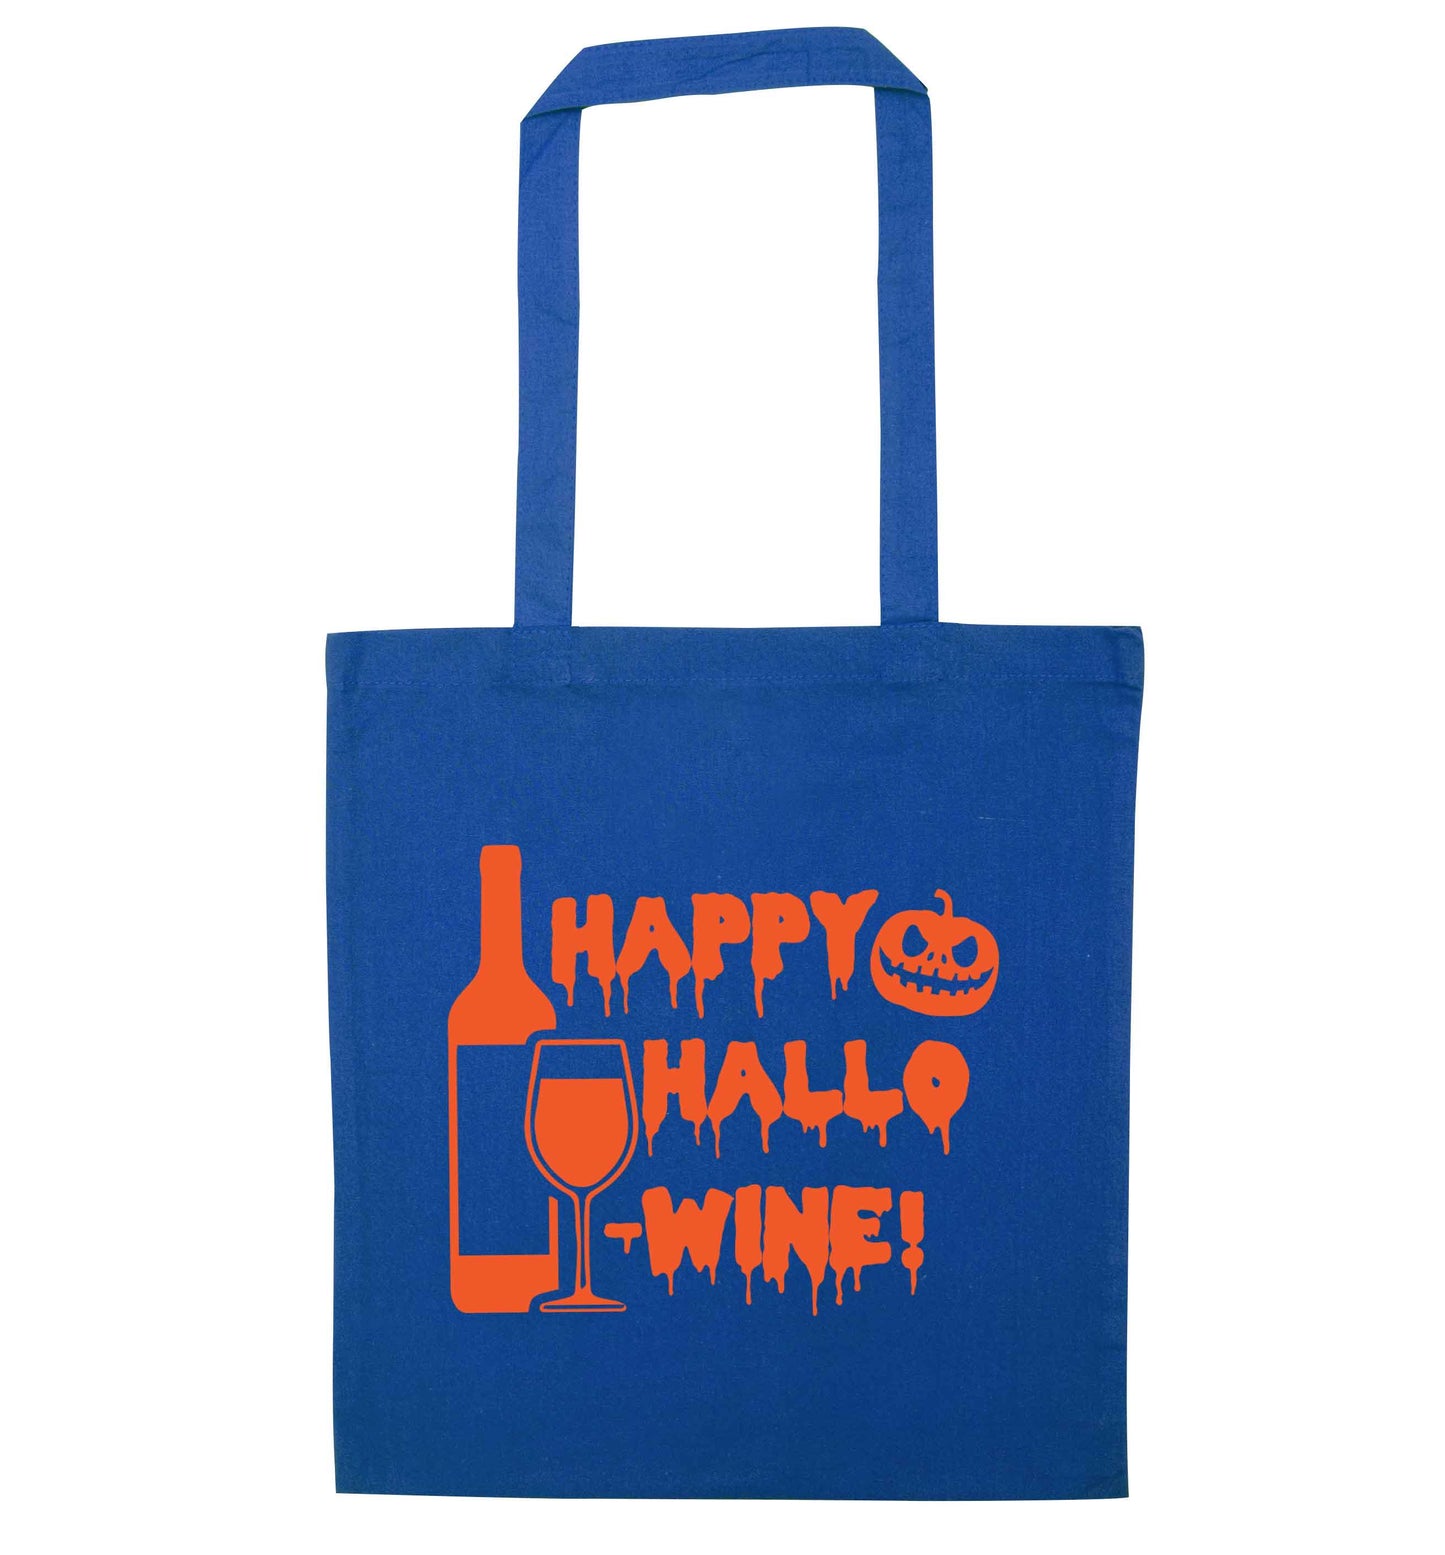 Happy hallow-wine blue tote bag